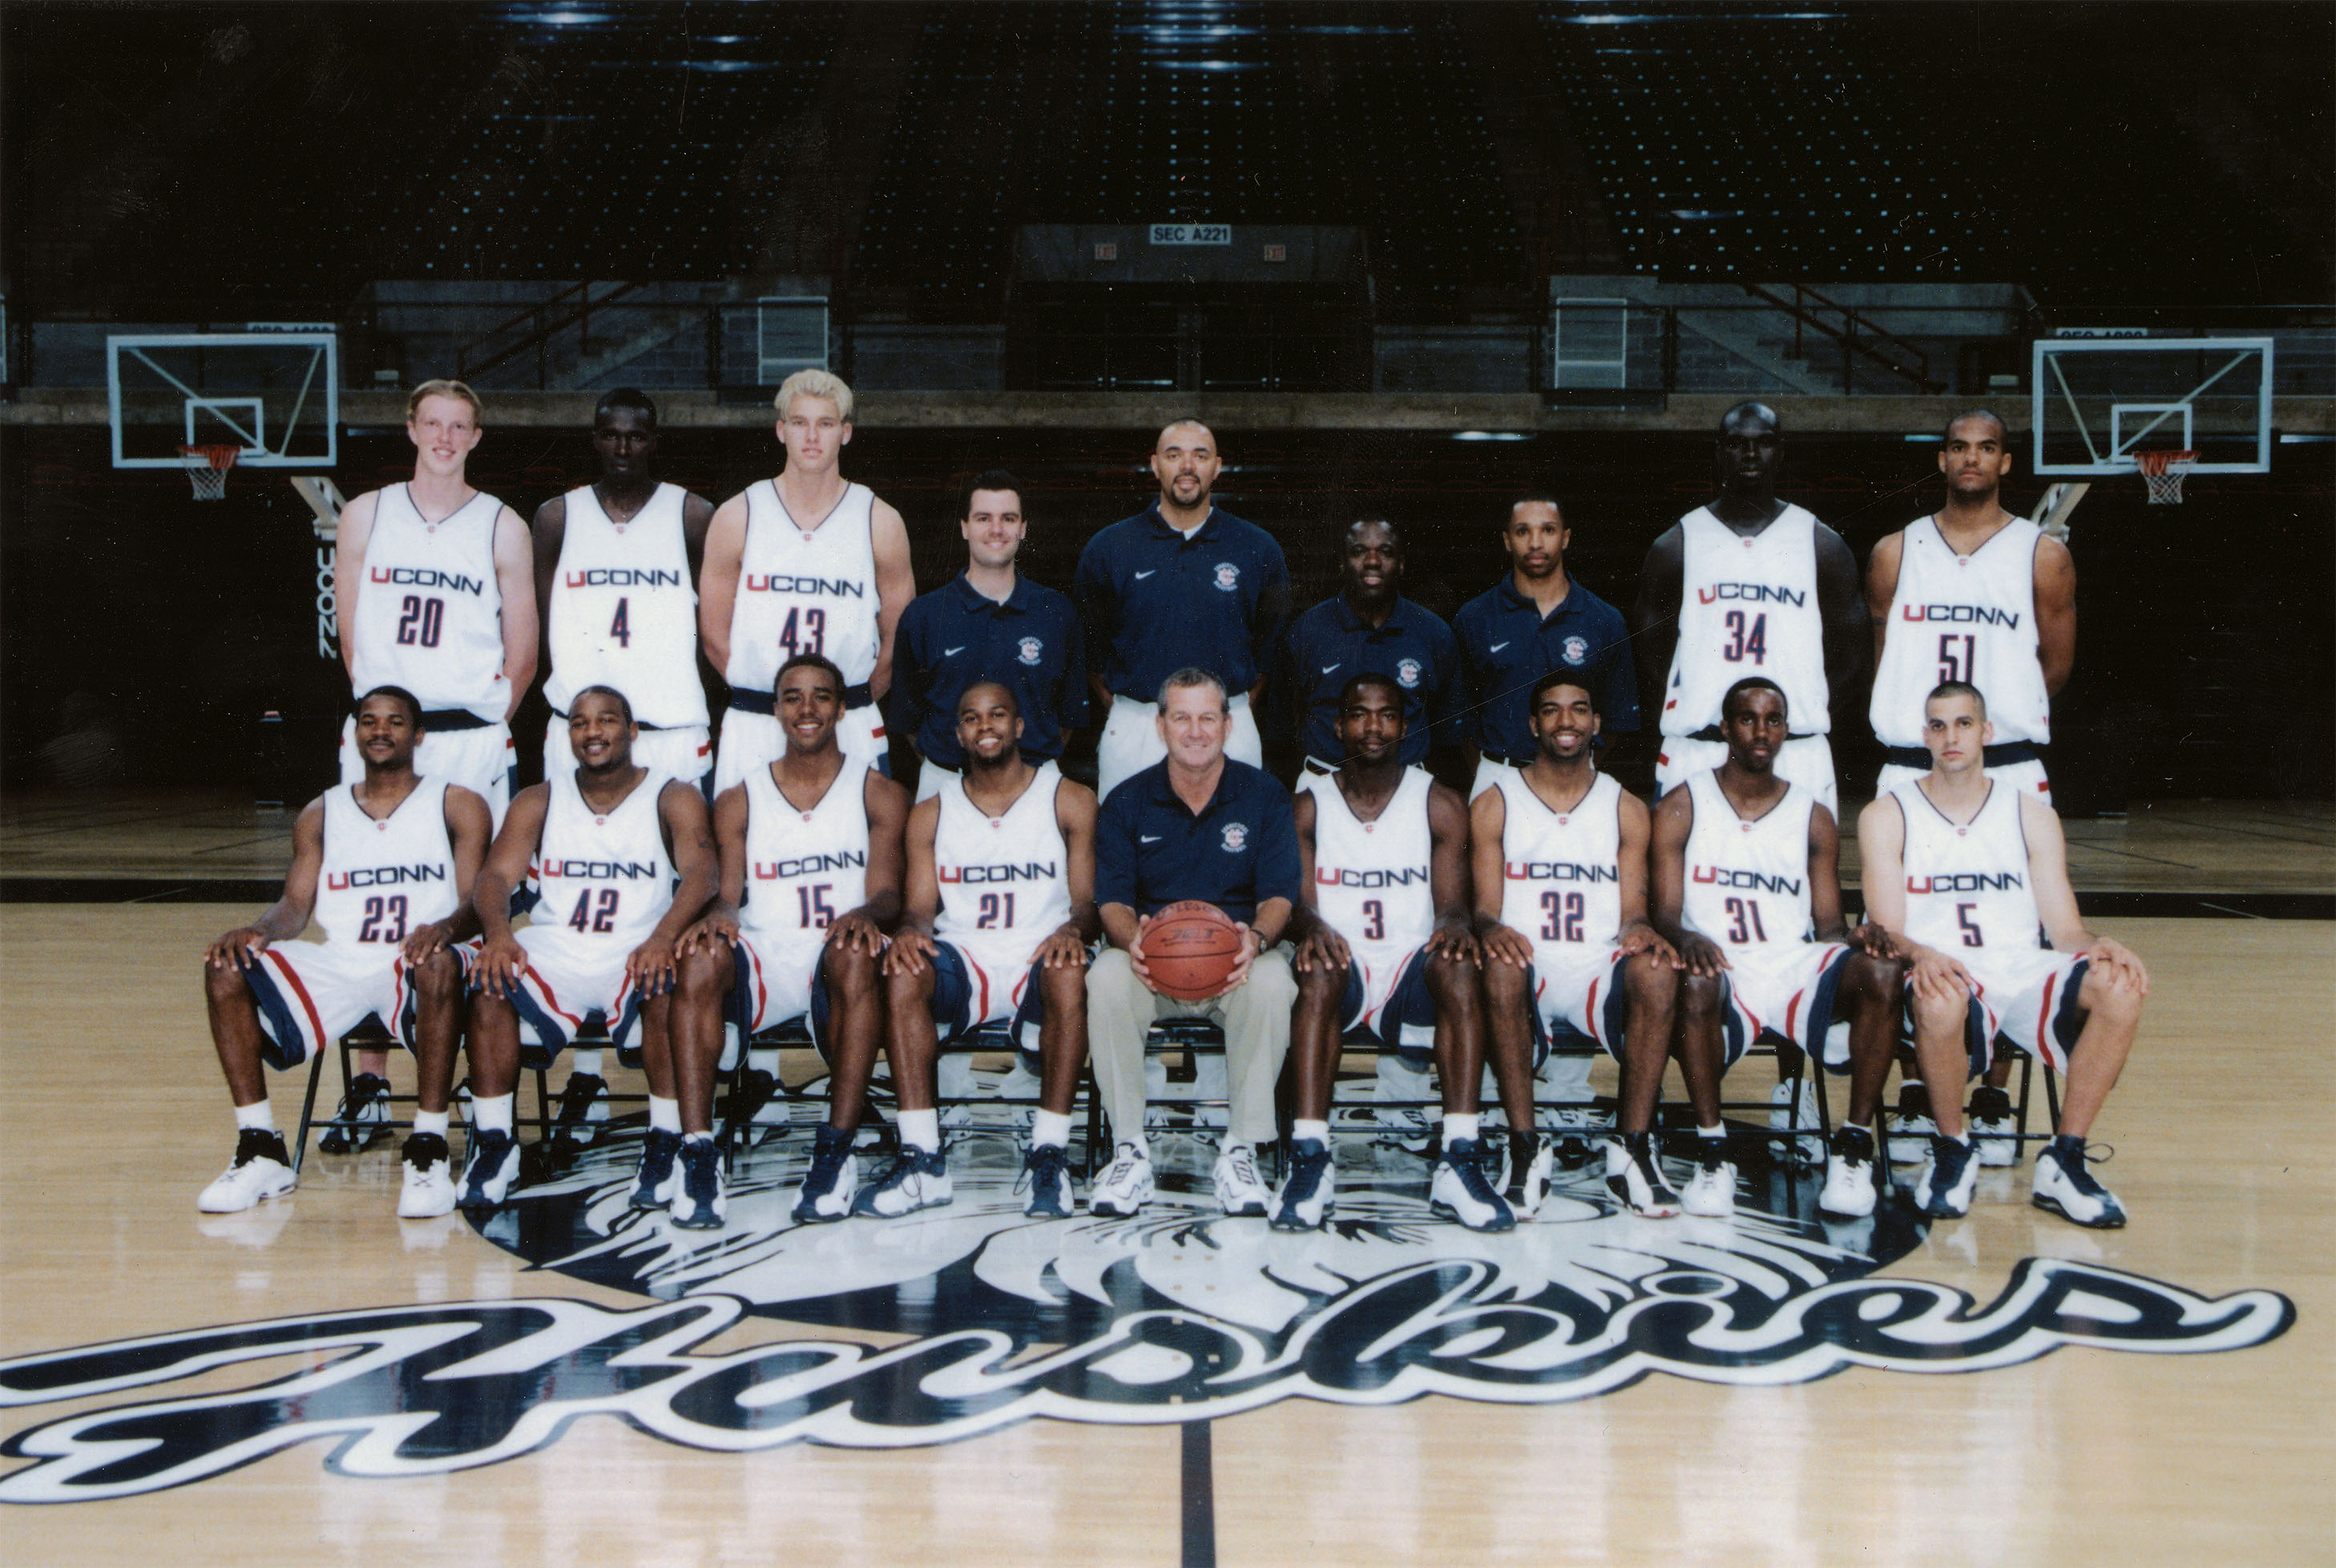 1999 Men's Basketball team photograph